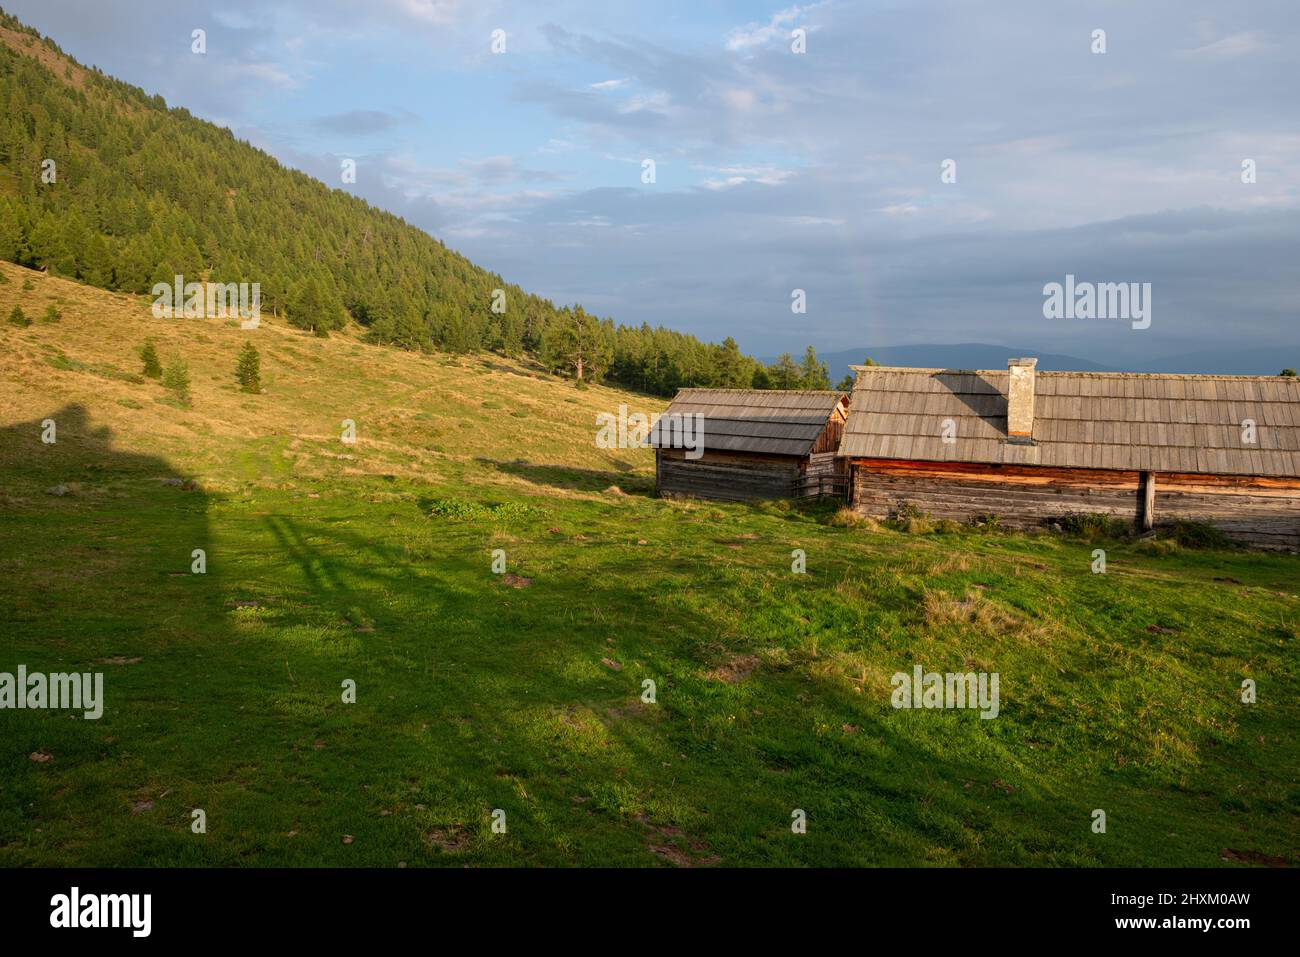 assembly of huts on Vordere Goeriacher Alm in Niedere Tauern, Salzburg, Austria Stock Photo